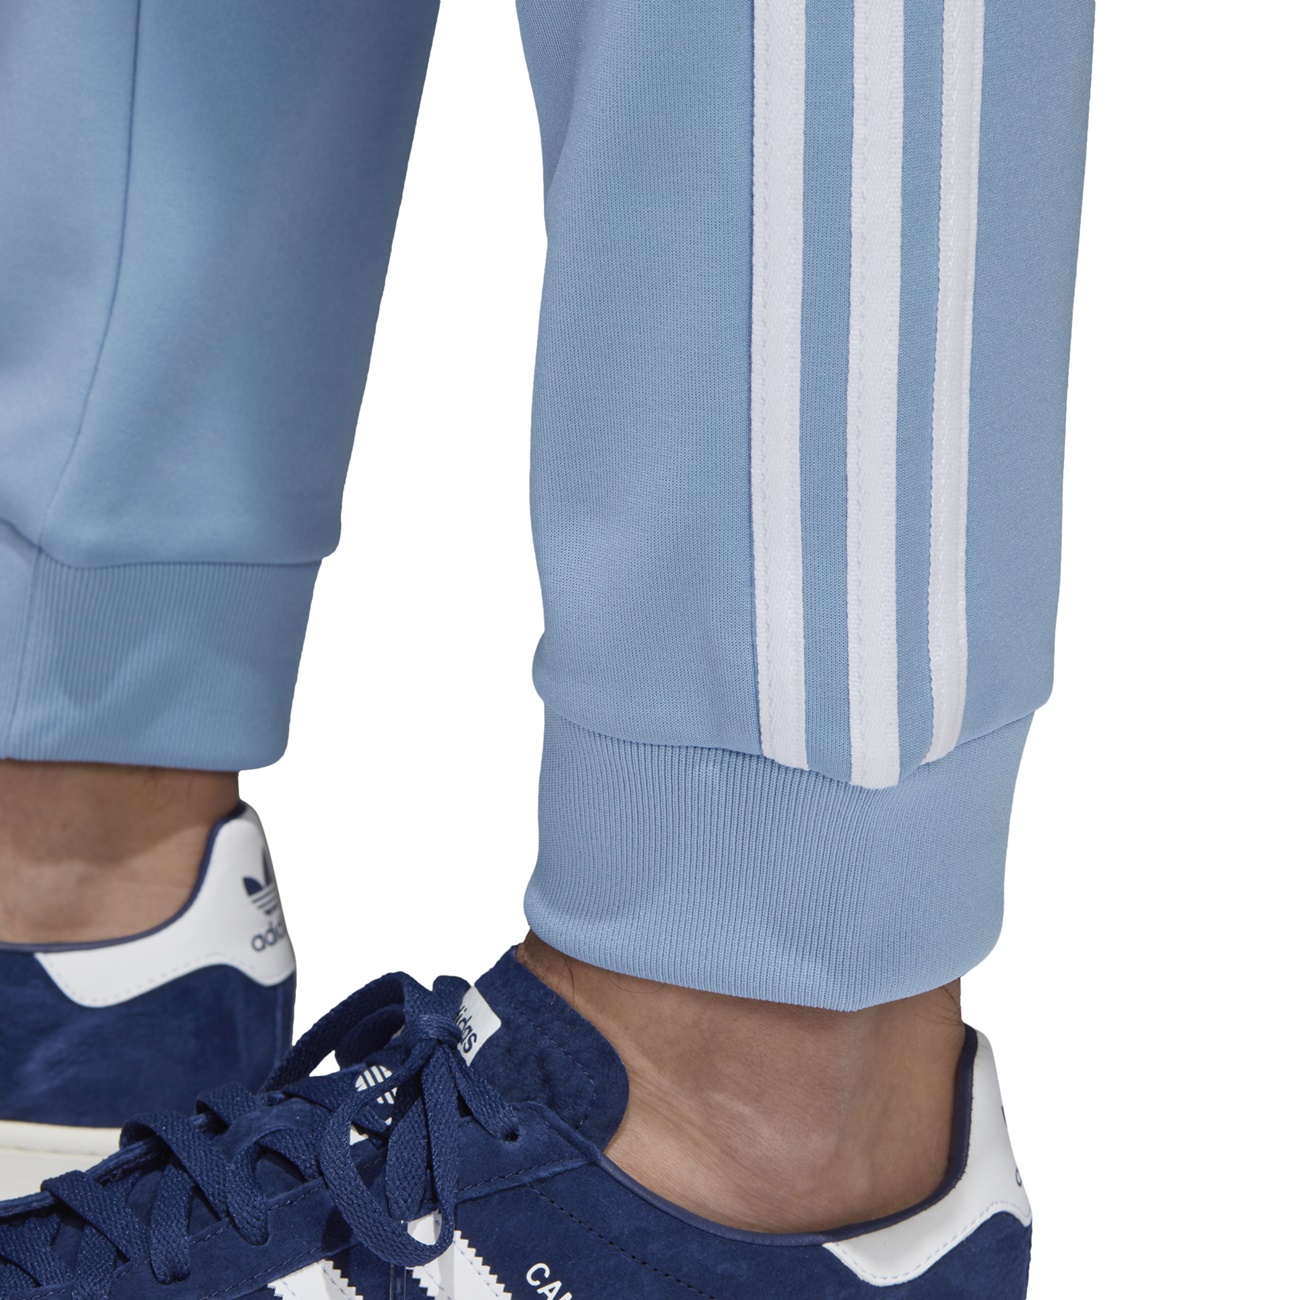 Adidas Originals Superstar Track Pants 